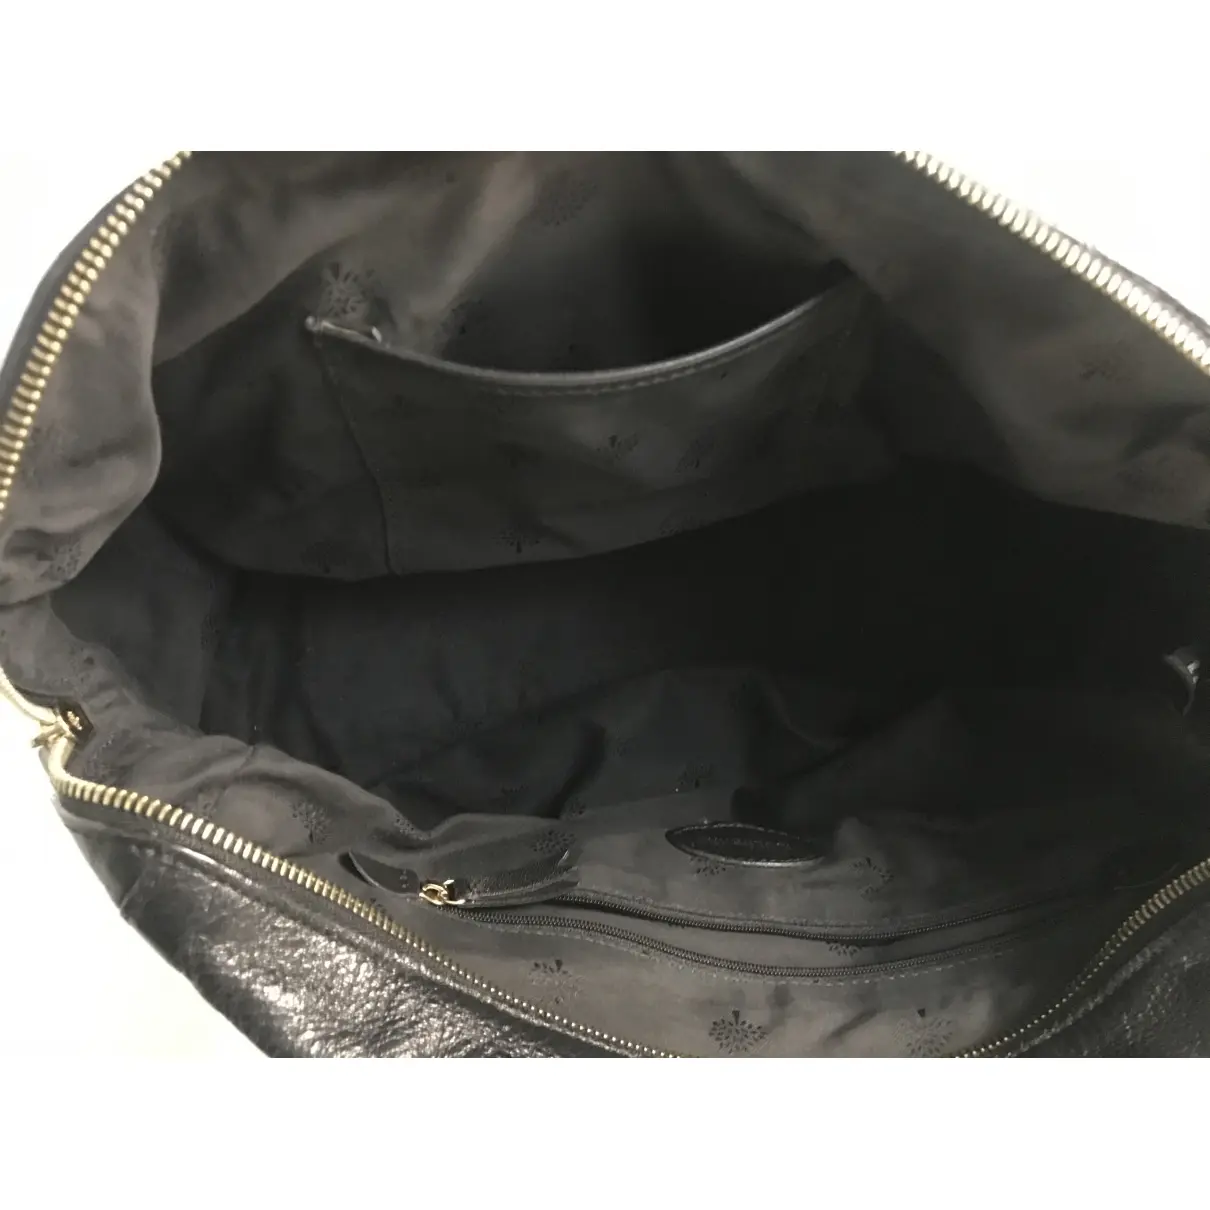 Del Rey leather handbag Mulberry